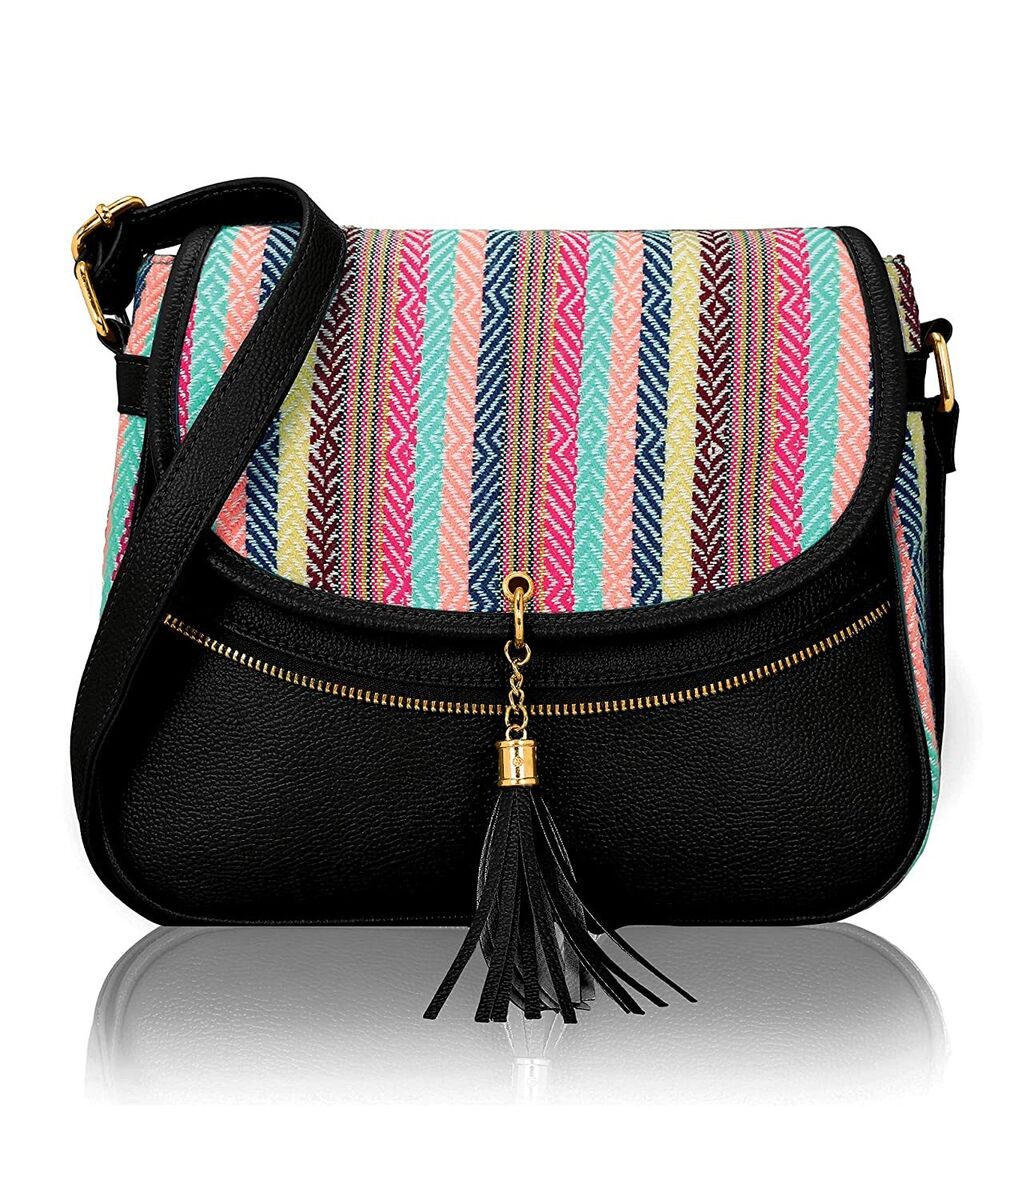 Sling Bags for Women : Buy Cross Bags & Sling Bags Online India - Amazon.in